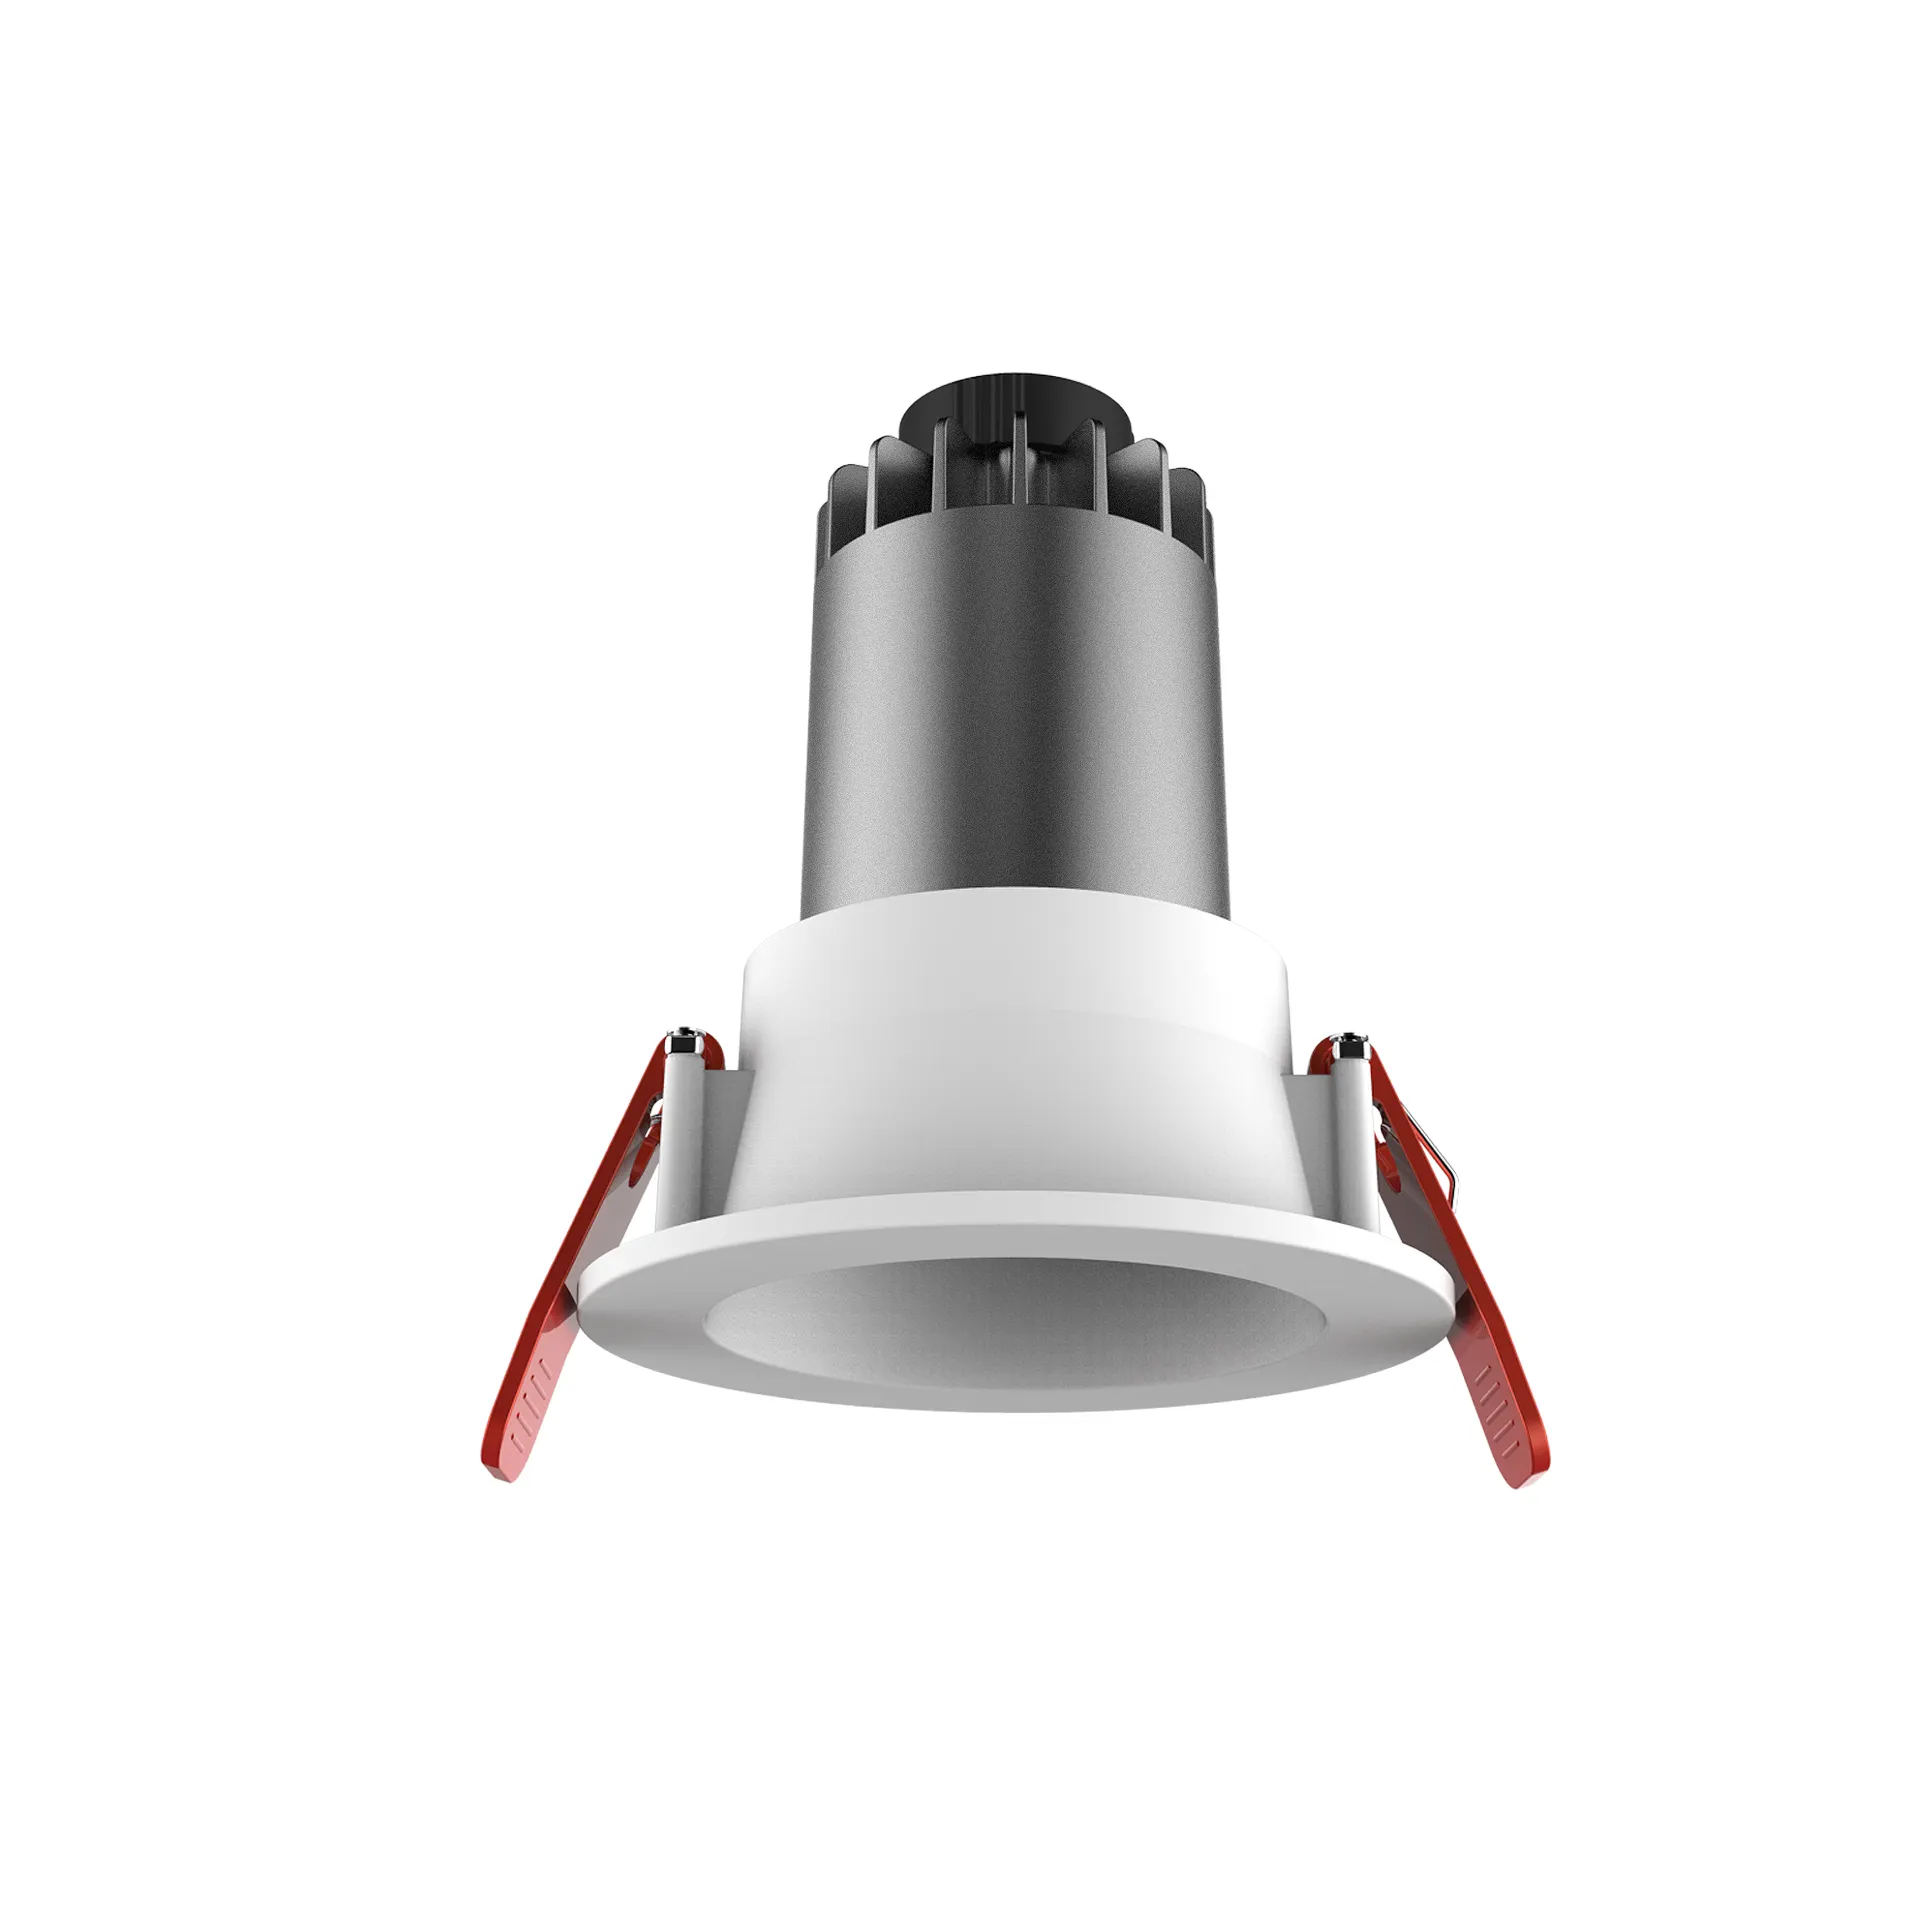 Kamsled useful led flush mount ceiling light